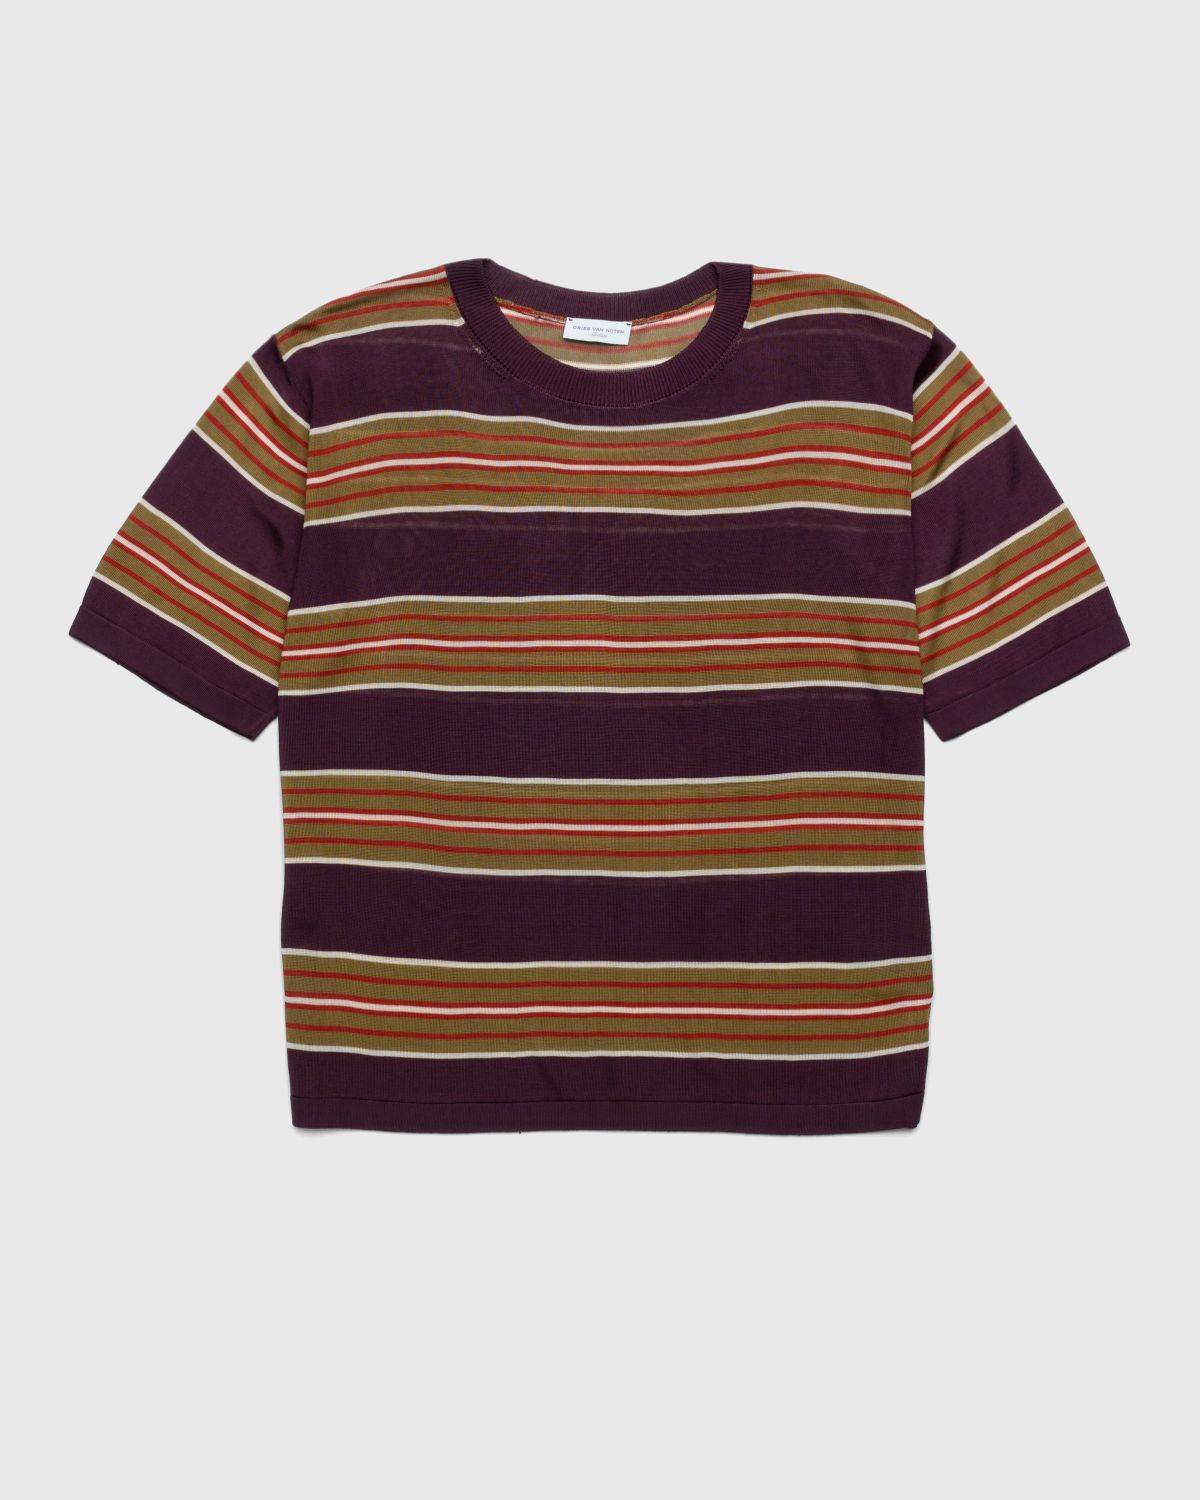 Dries van Noten – Mias Knit T-Shirt Burgundy - T-Shirts - Red - Image 1